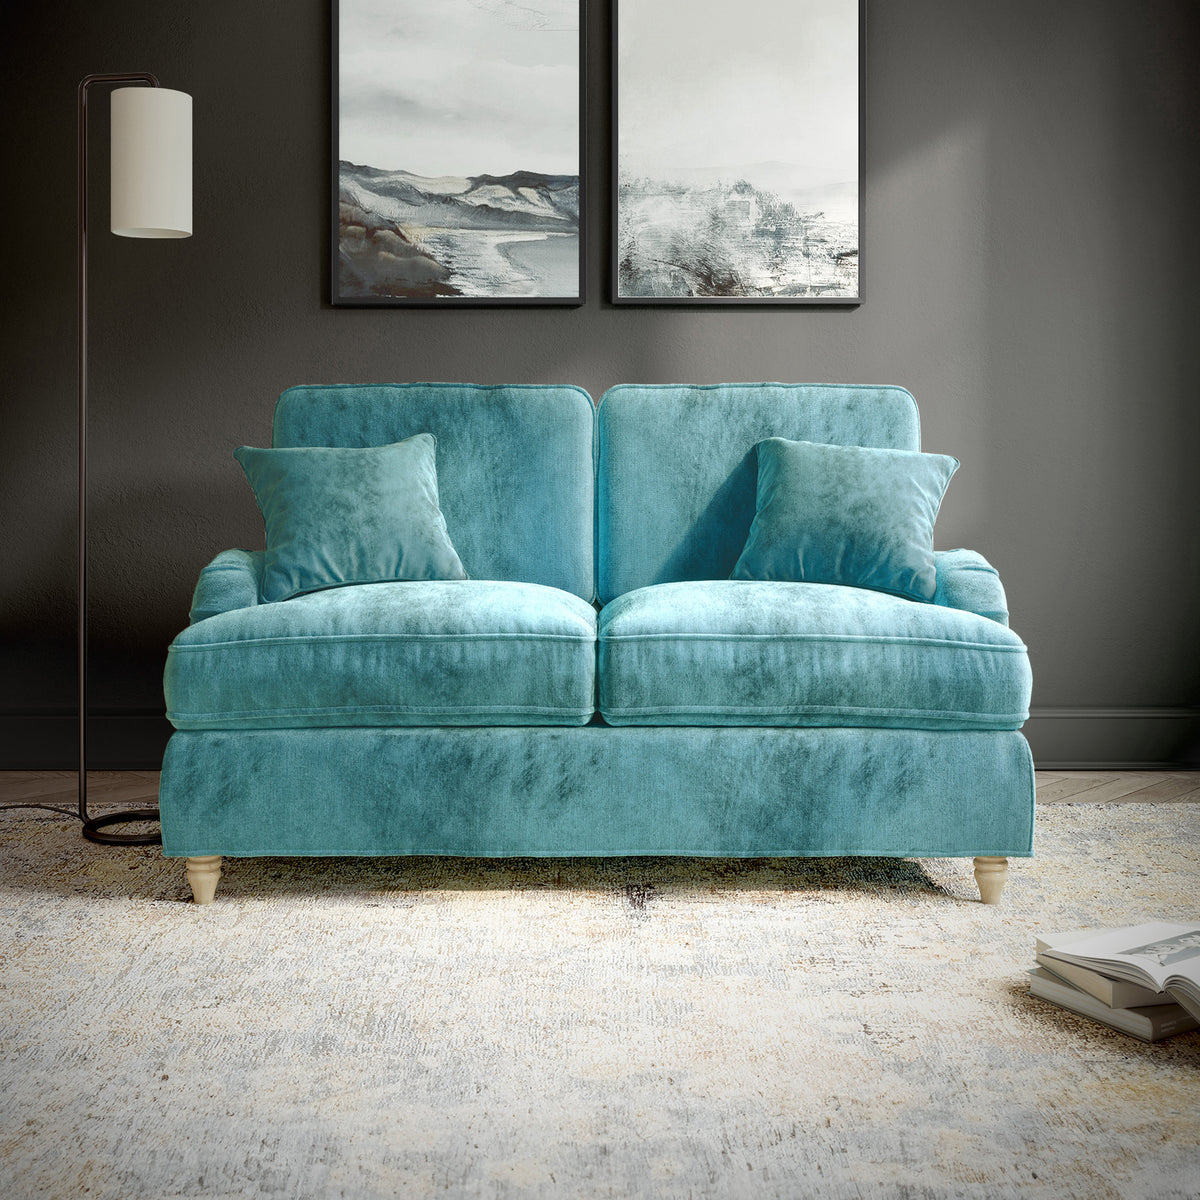 Arthur Lagoon 2 Seater Sofa from Roseland Furniture